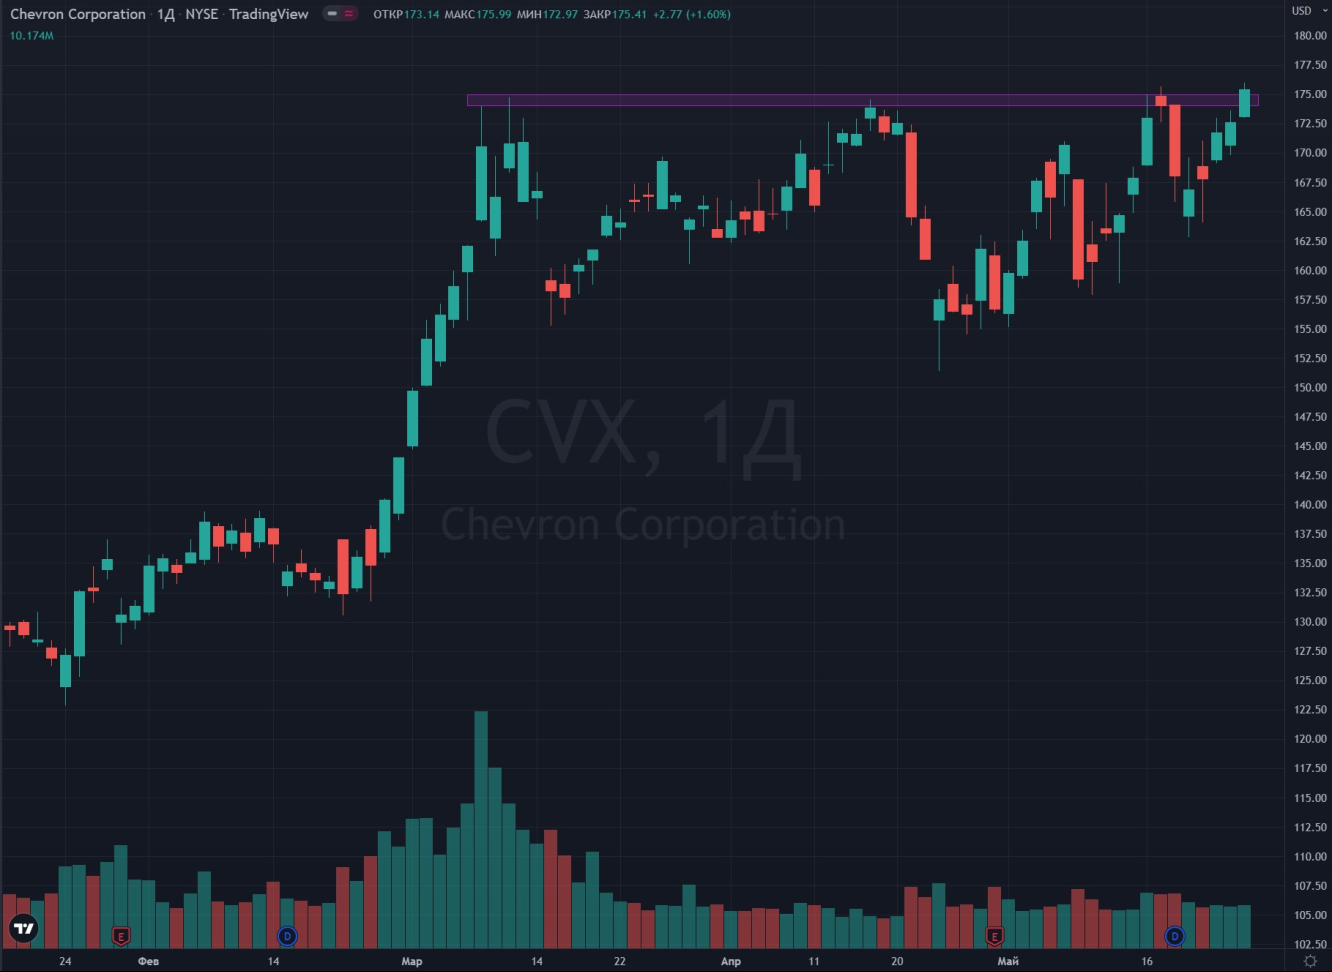 Chevron (CVX)